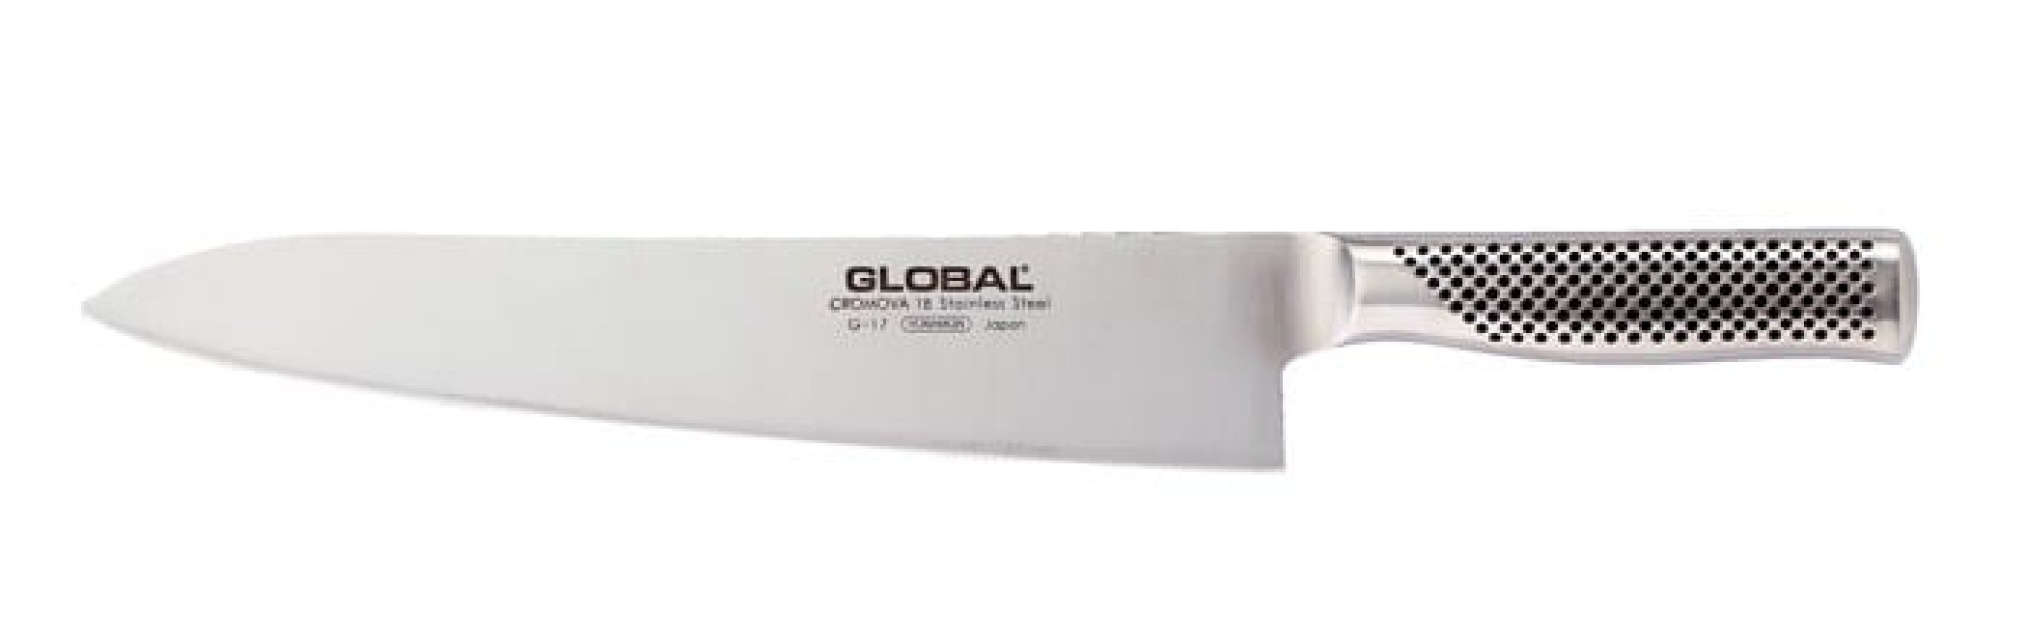 Kockkniv G-17, 27 cm - Global